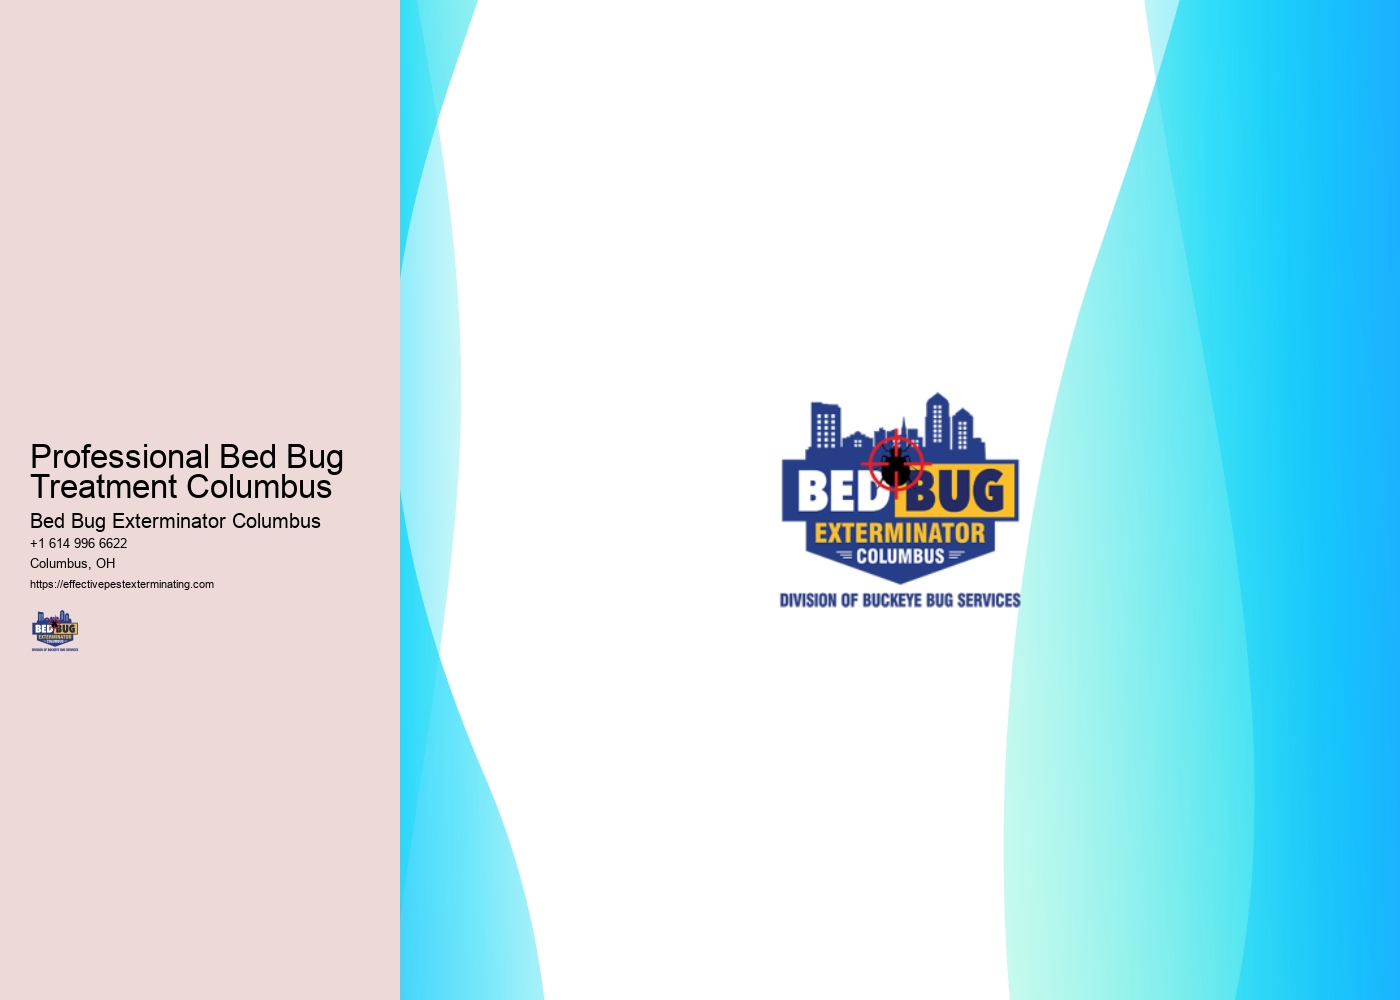 Professional Bed Bug Treatment Columbus